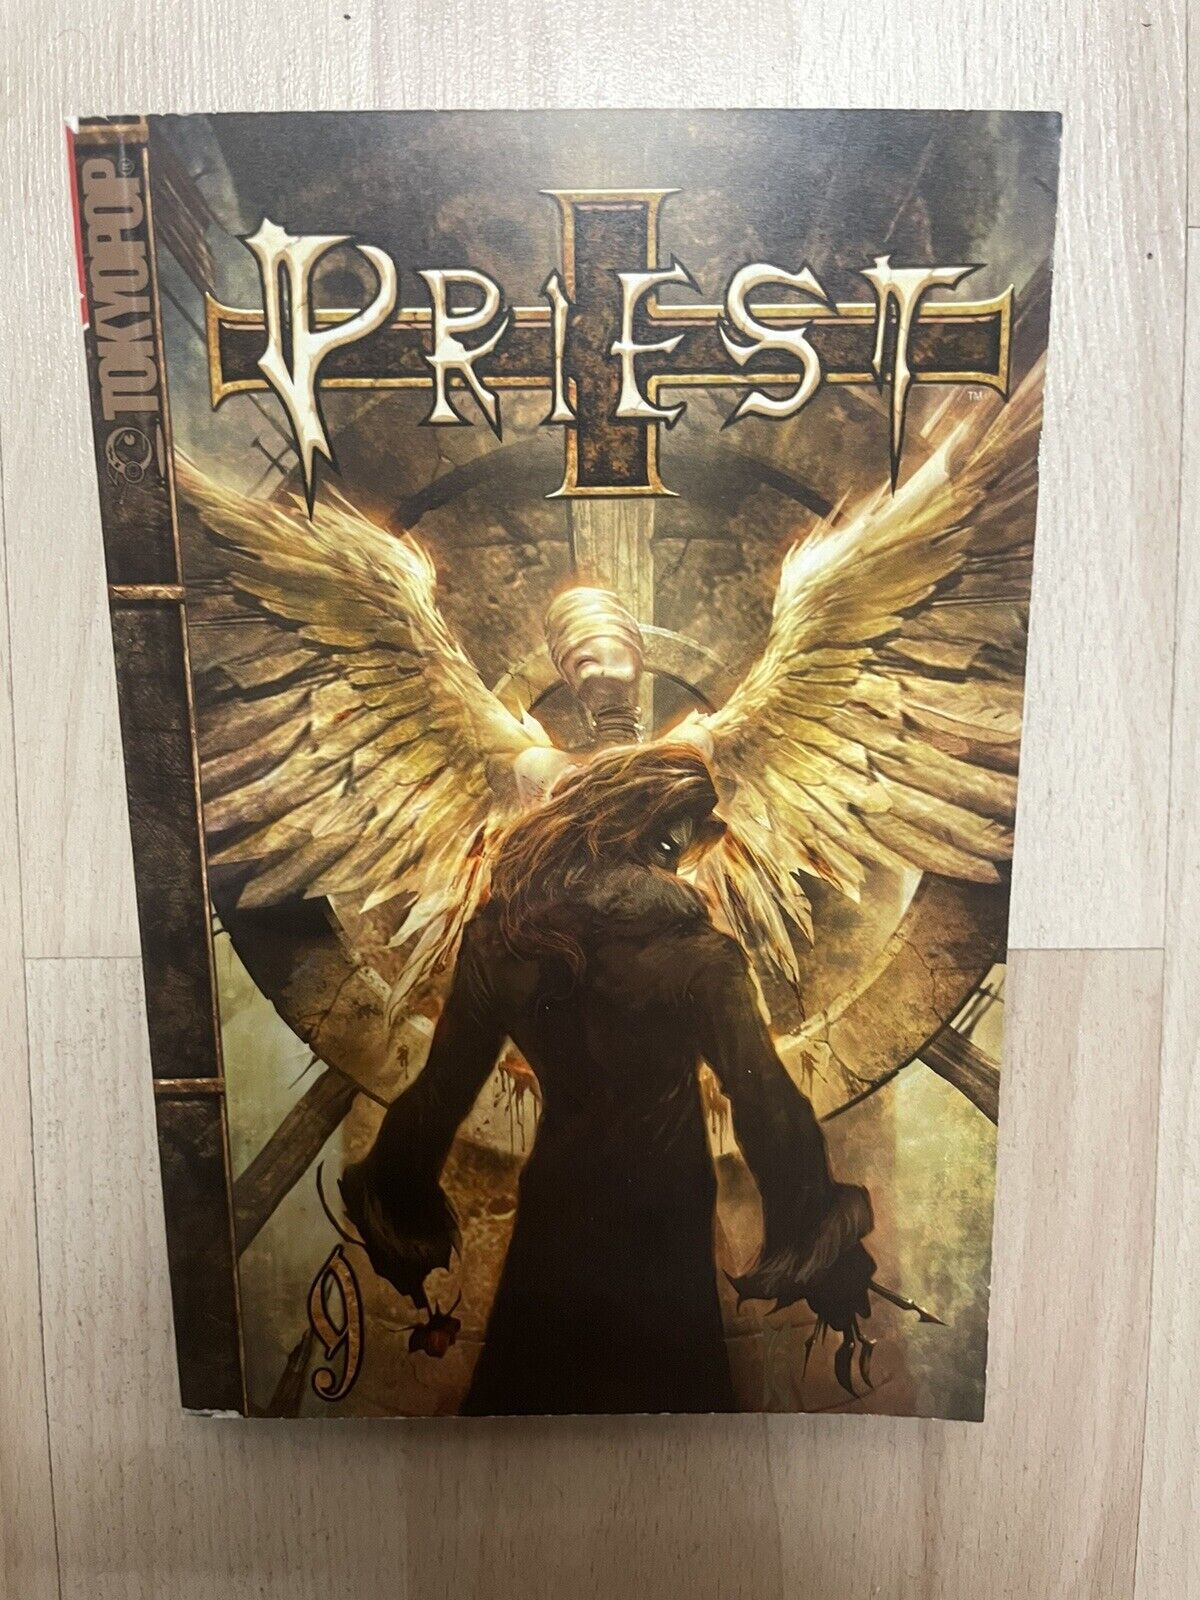 Priest Manga Volume 9 Paperback English